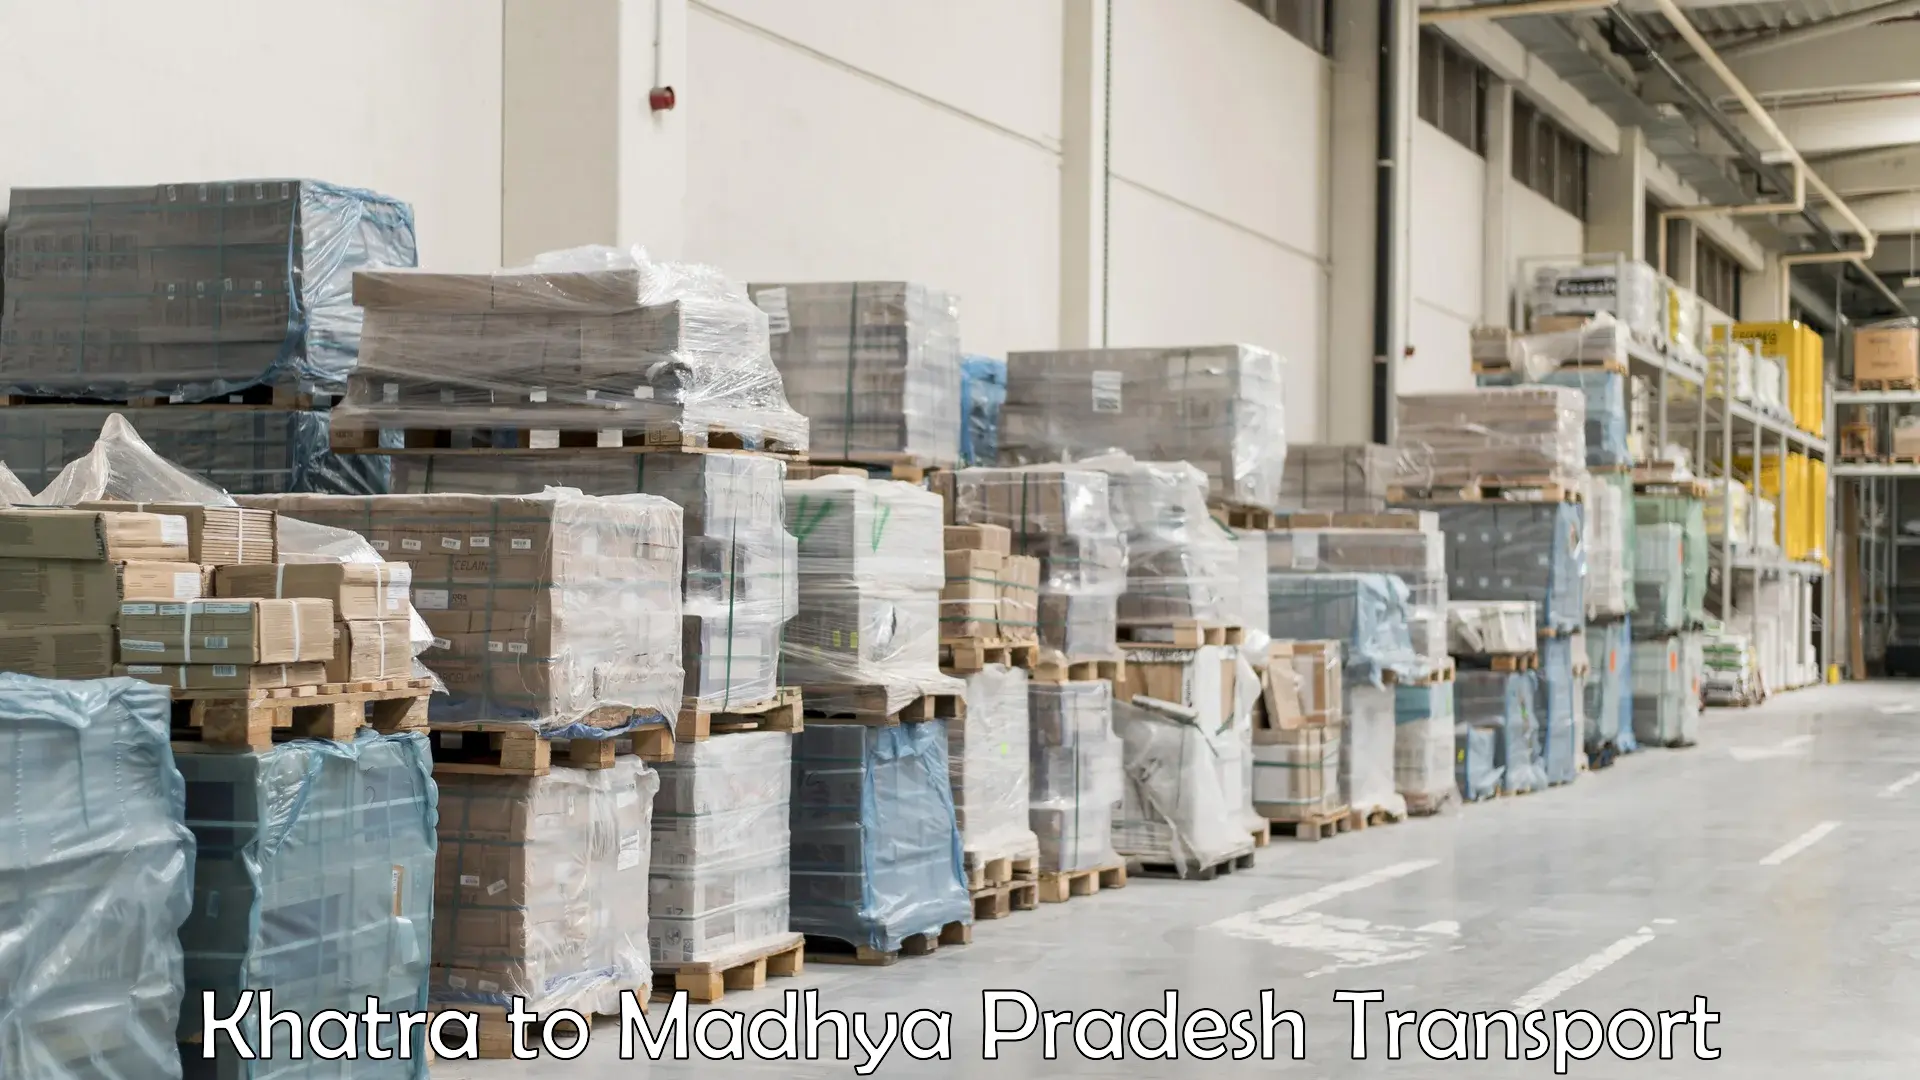 Truck transport companies in India Khatra to Mandsaur